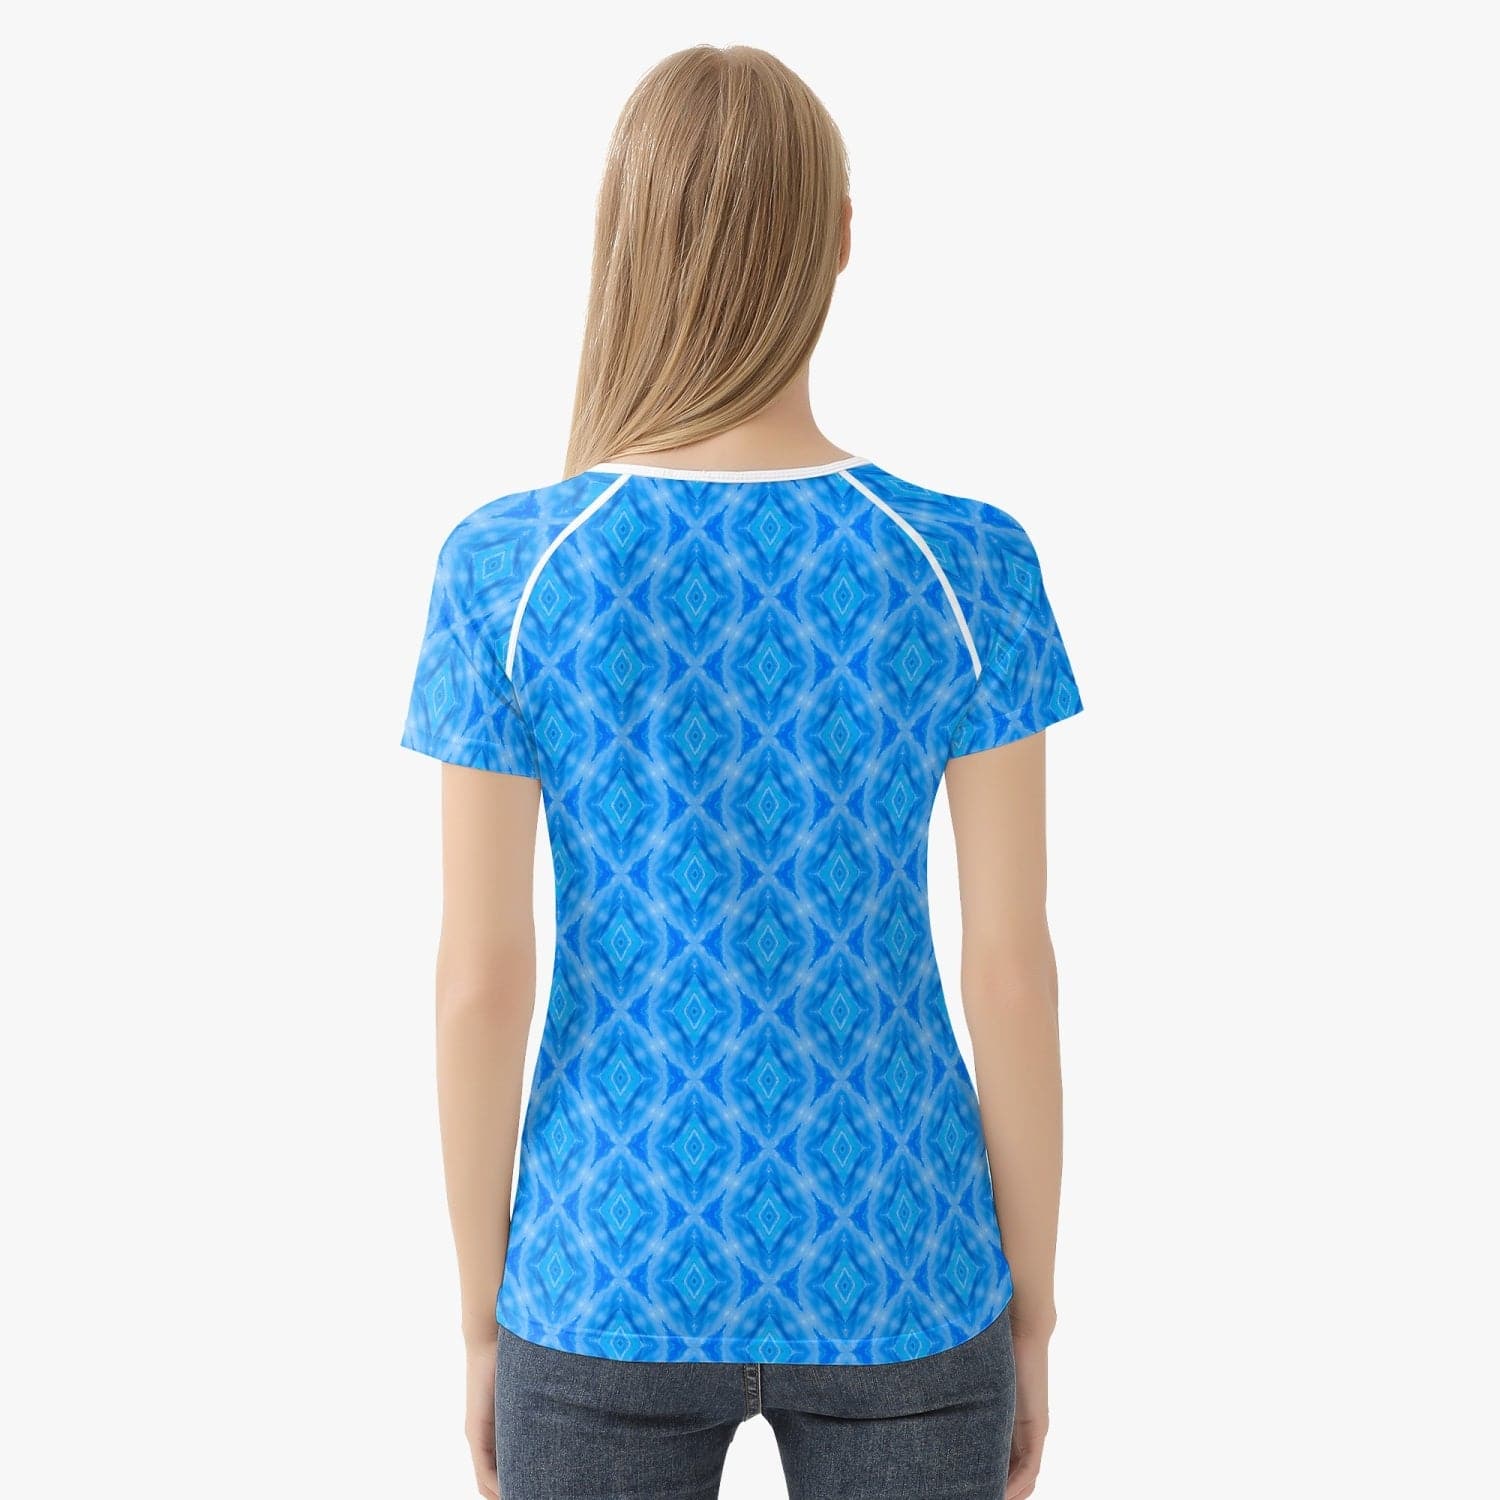 Blue Air Throat Chacra Handmade Yoga Top for  Women sports T-shirt, by Sensus Studio Design